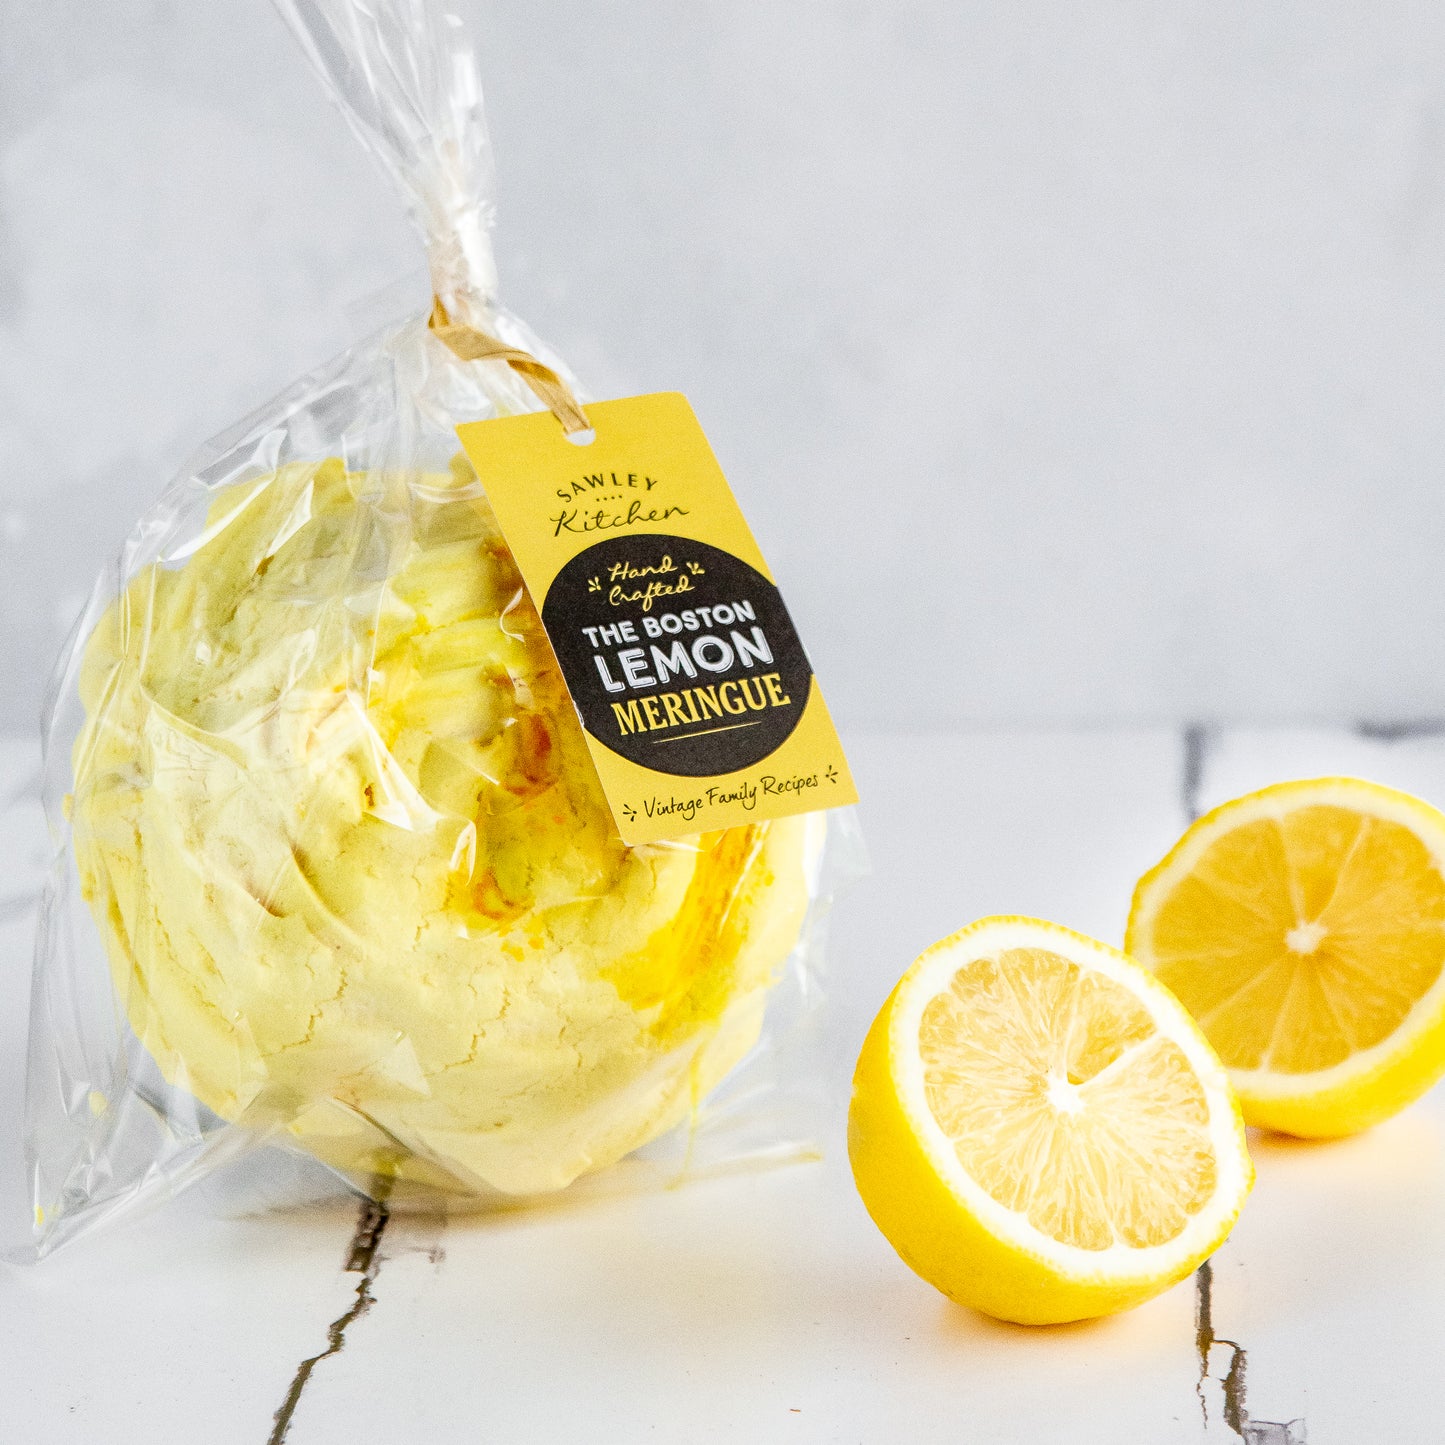 Giant Meringue - Boston Lemon